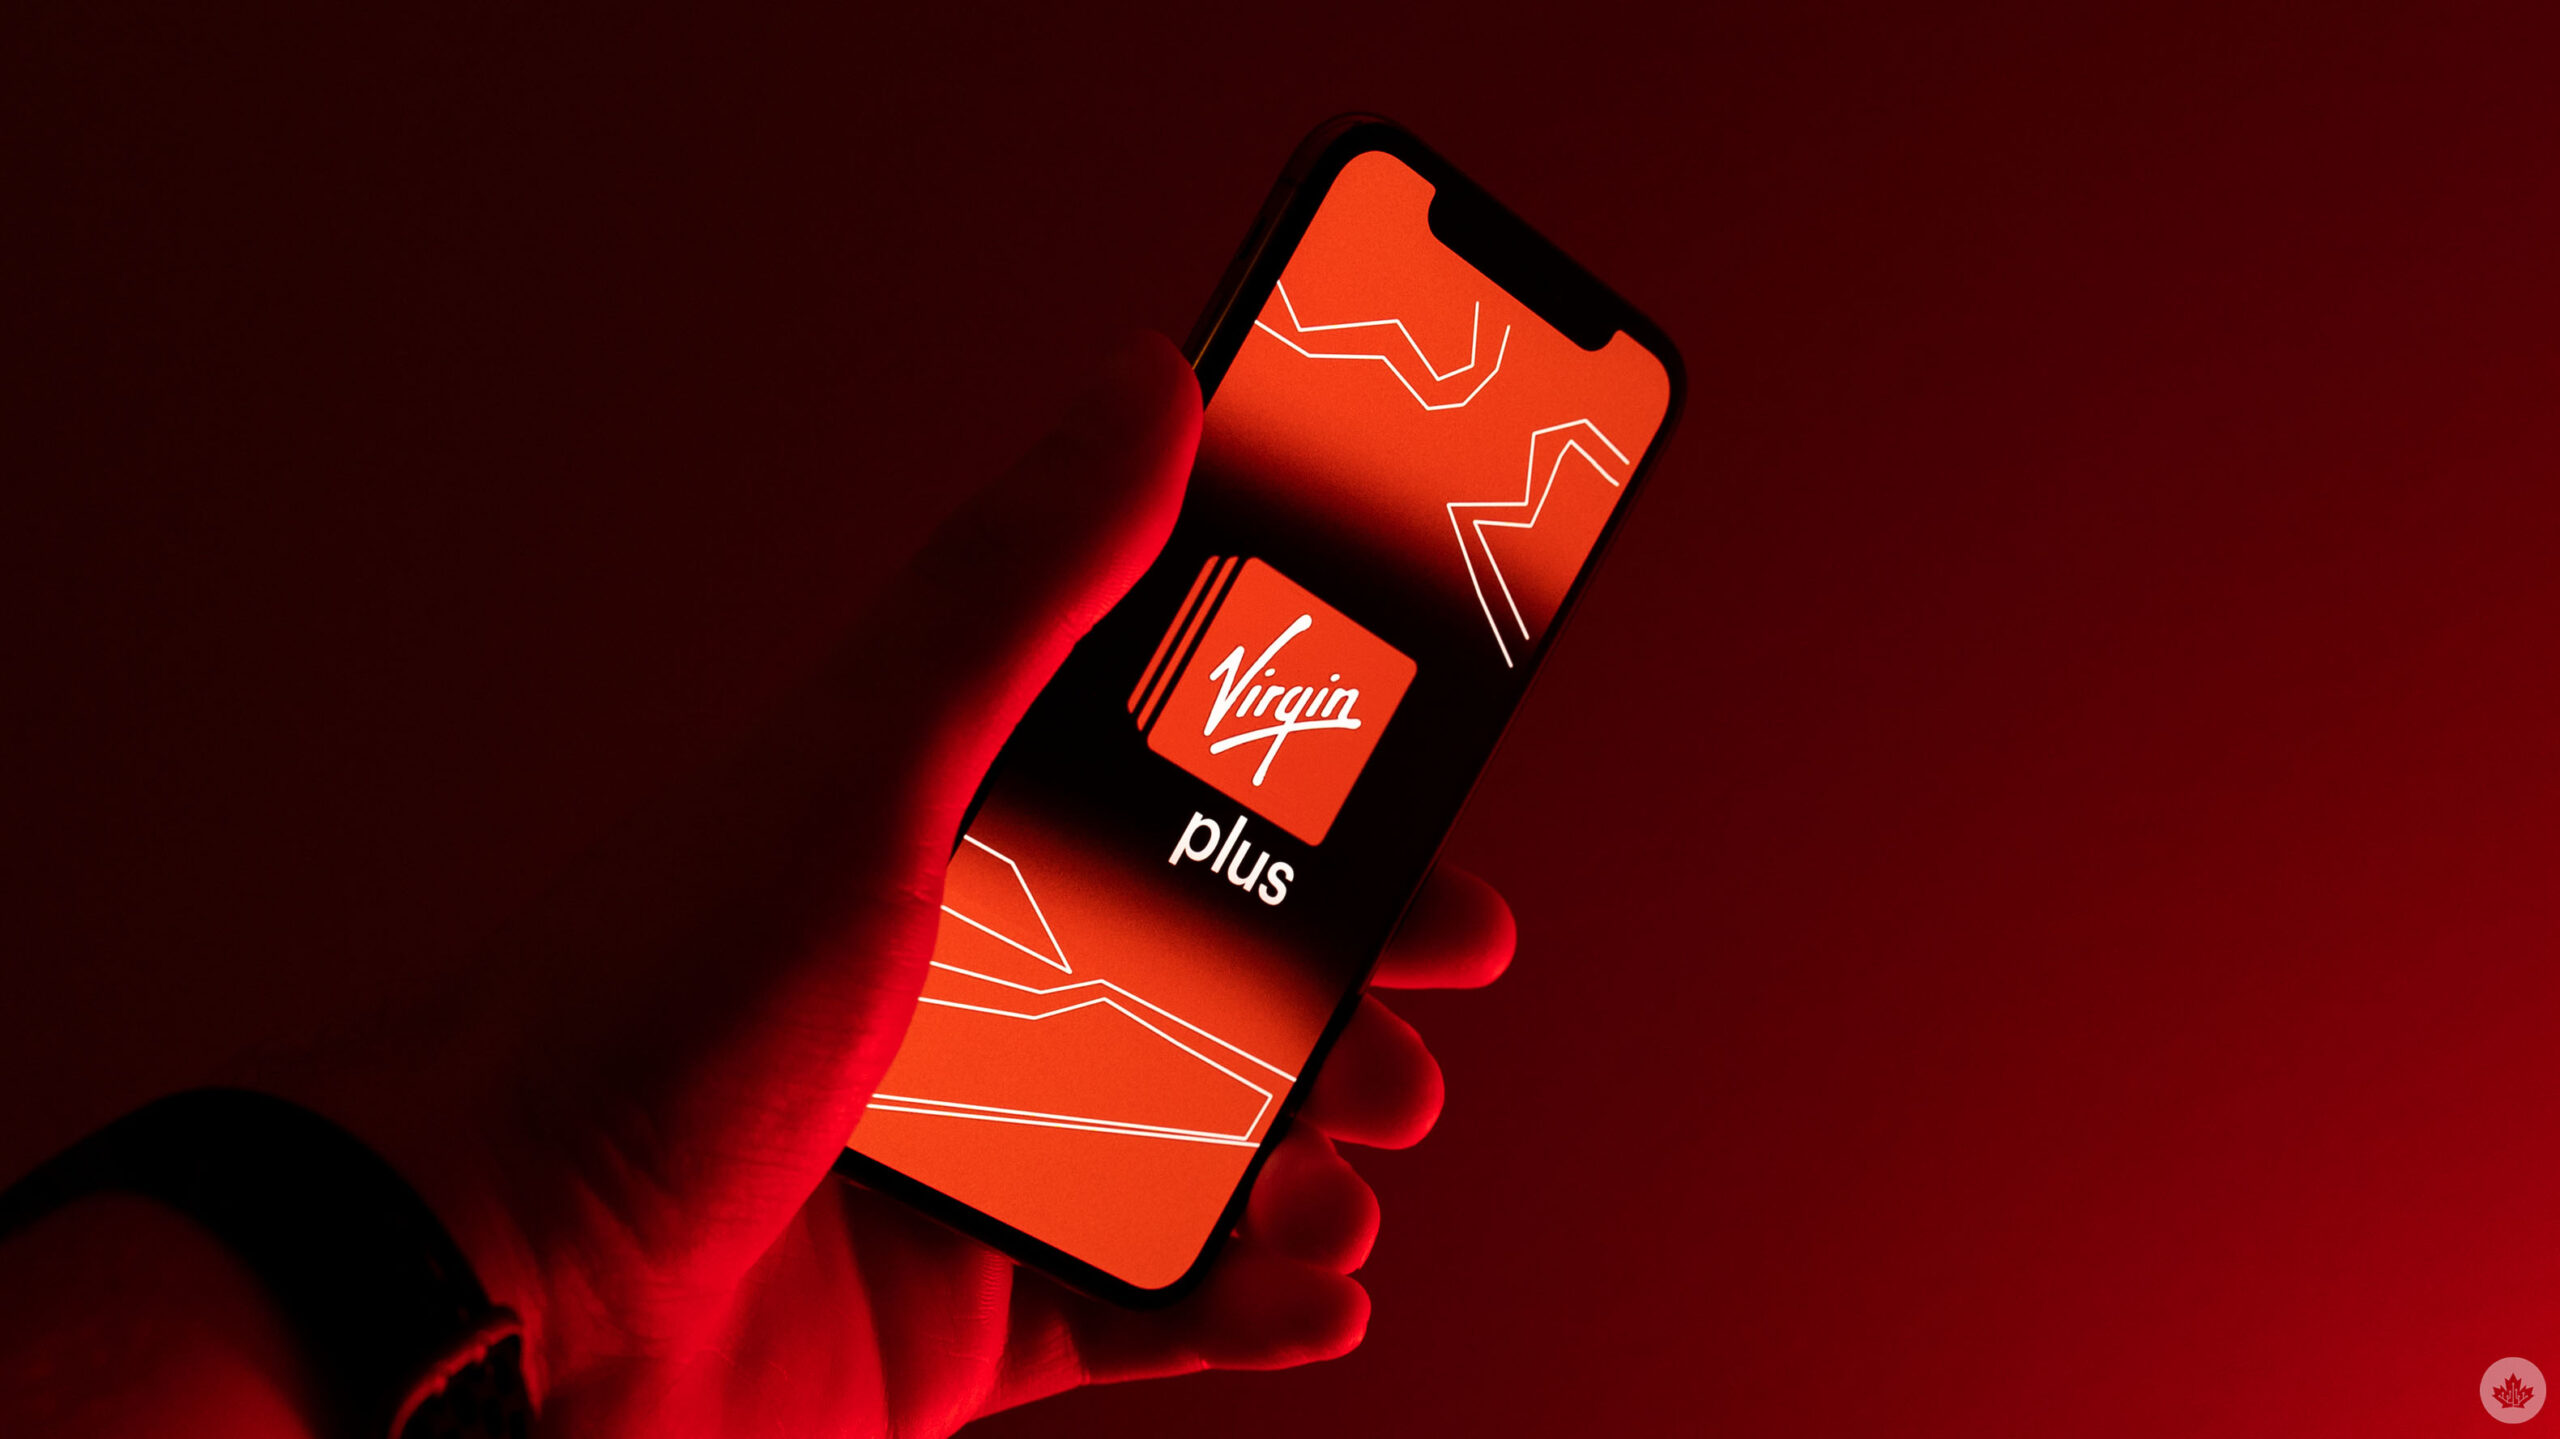 Virgin Plus logo on an iPhone